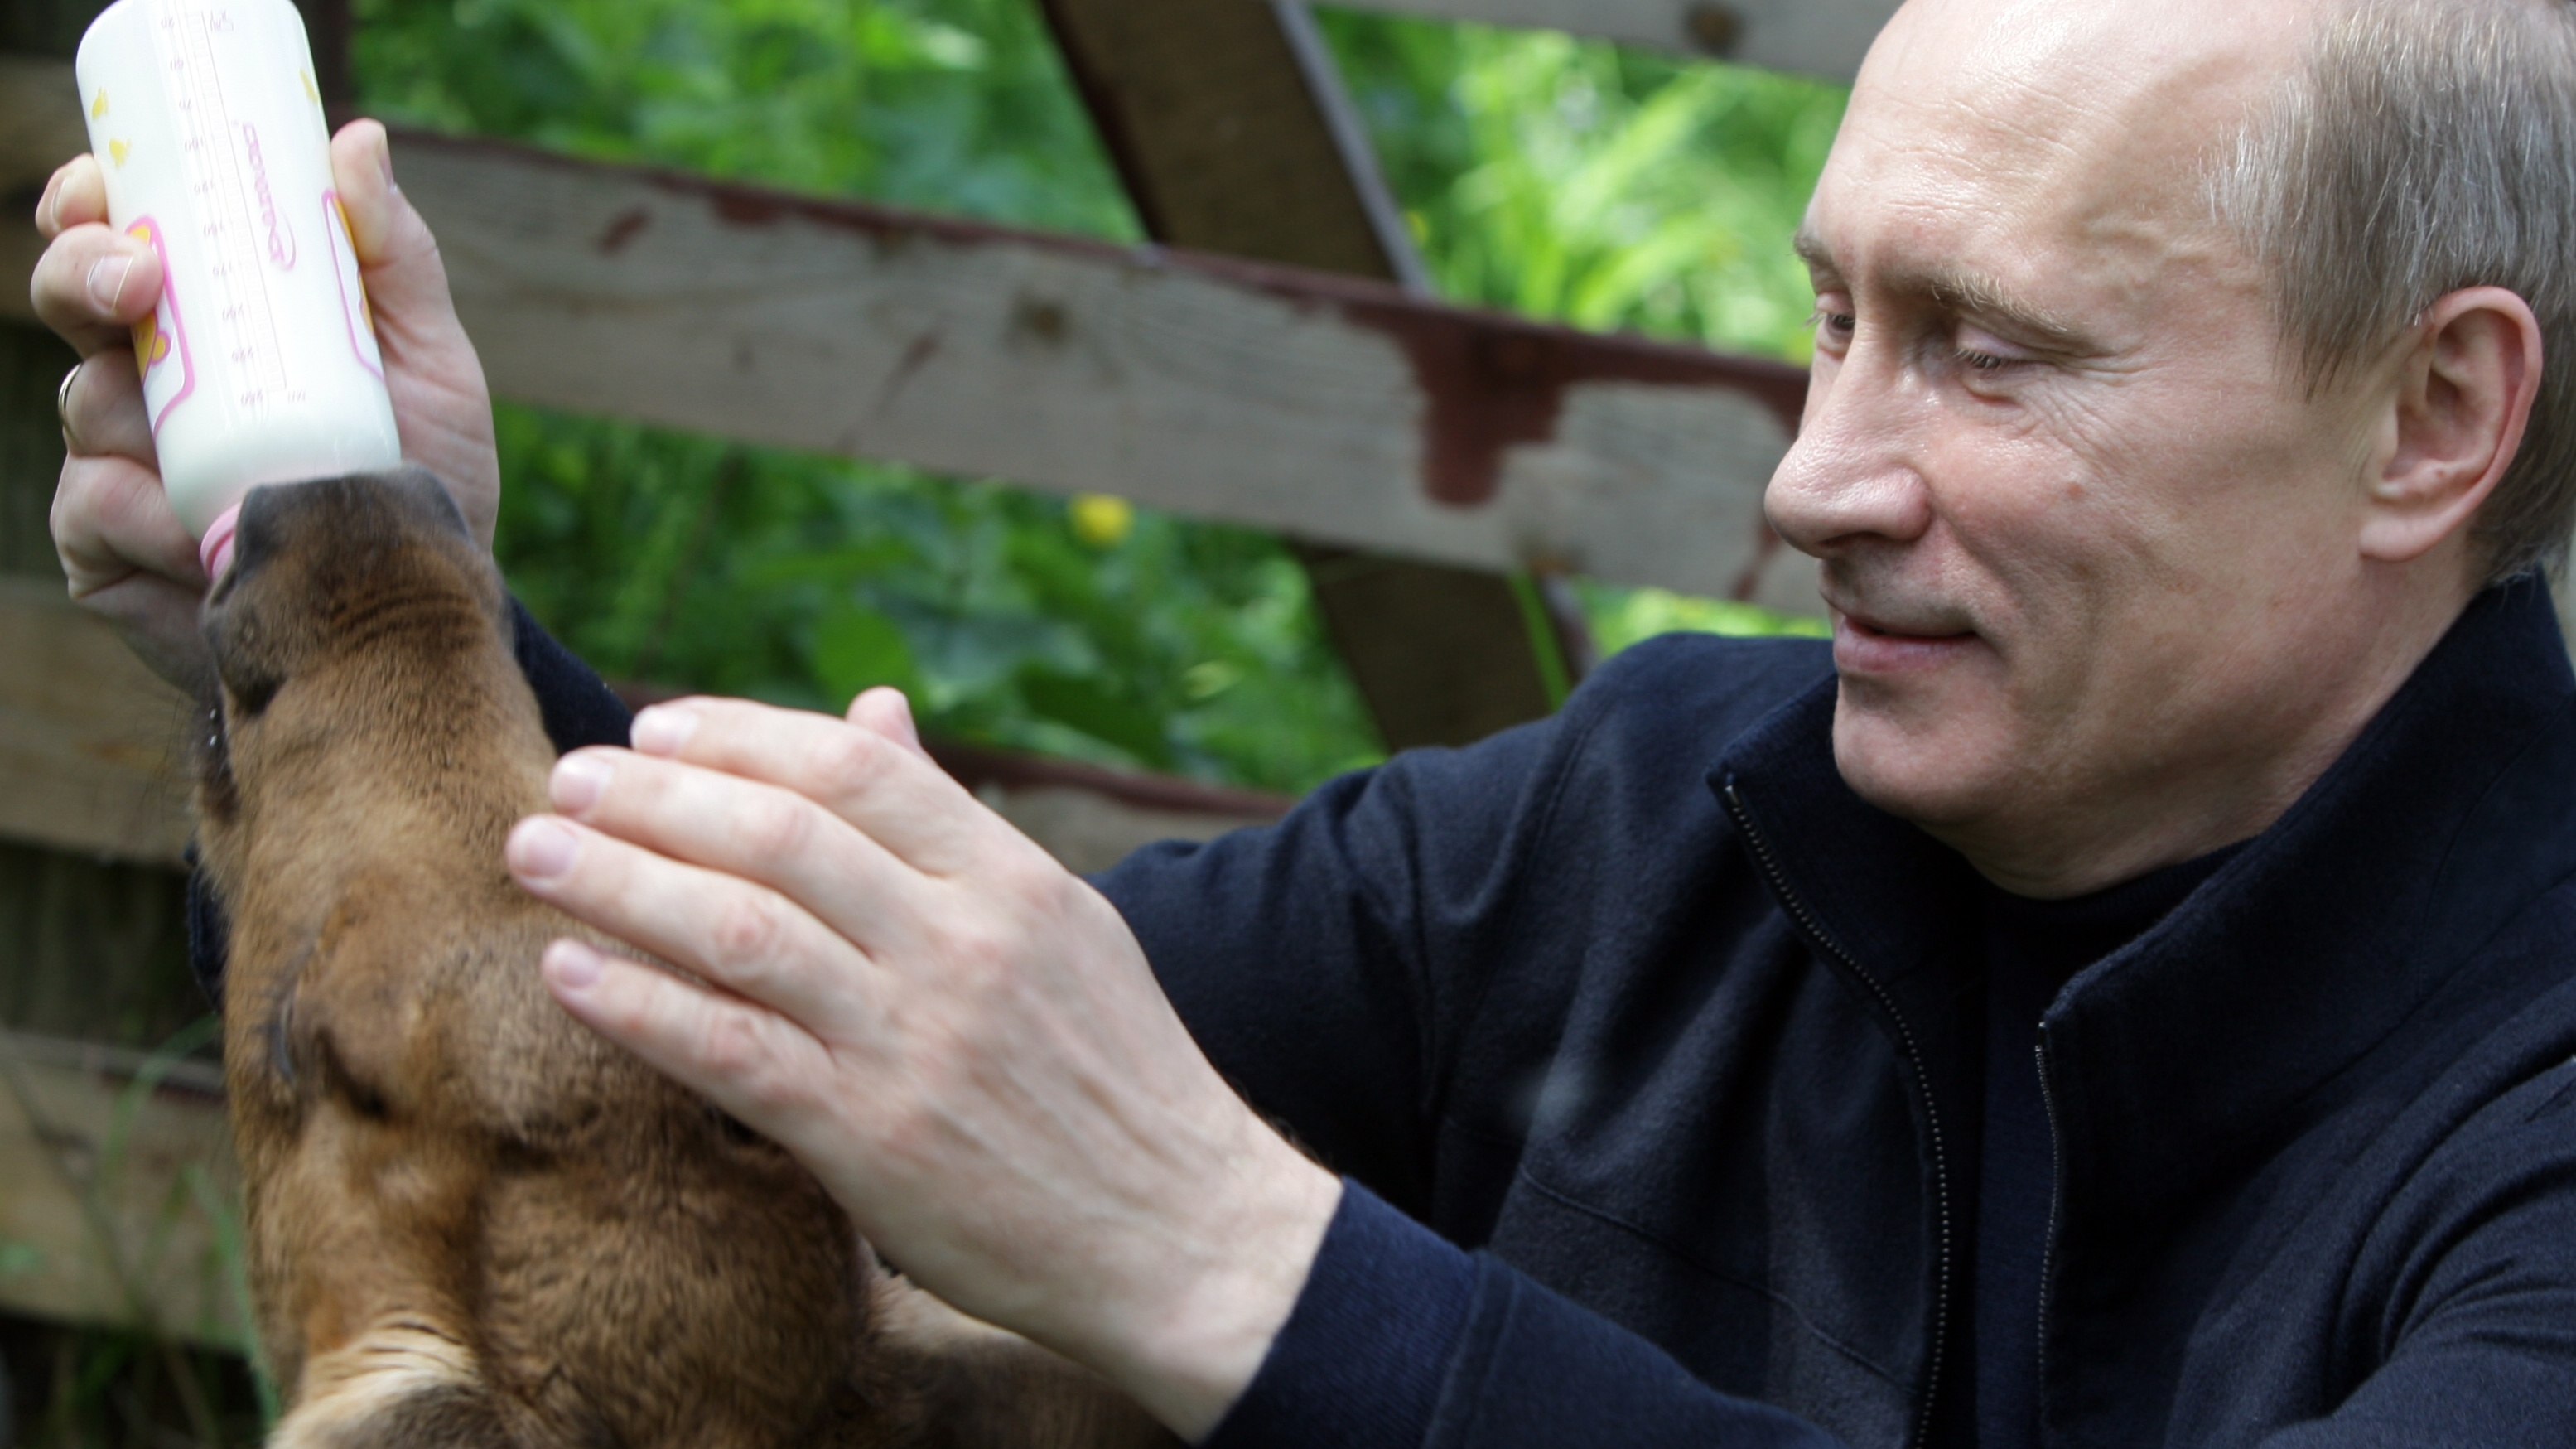 Vladimir Putin feeds a calf during a 2010 visit to Moose Island National Park